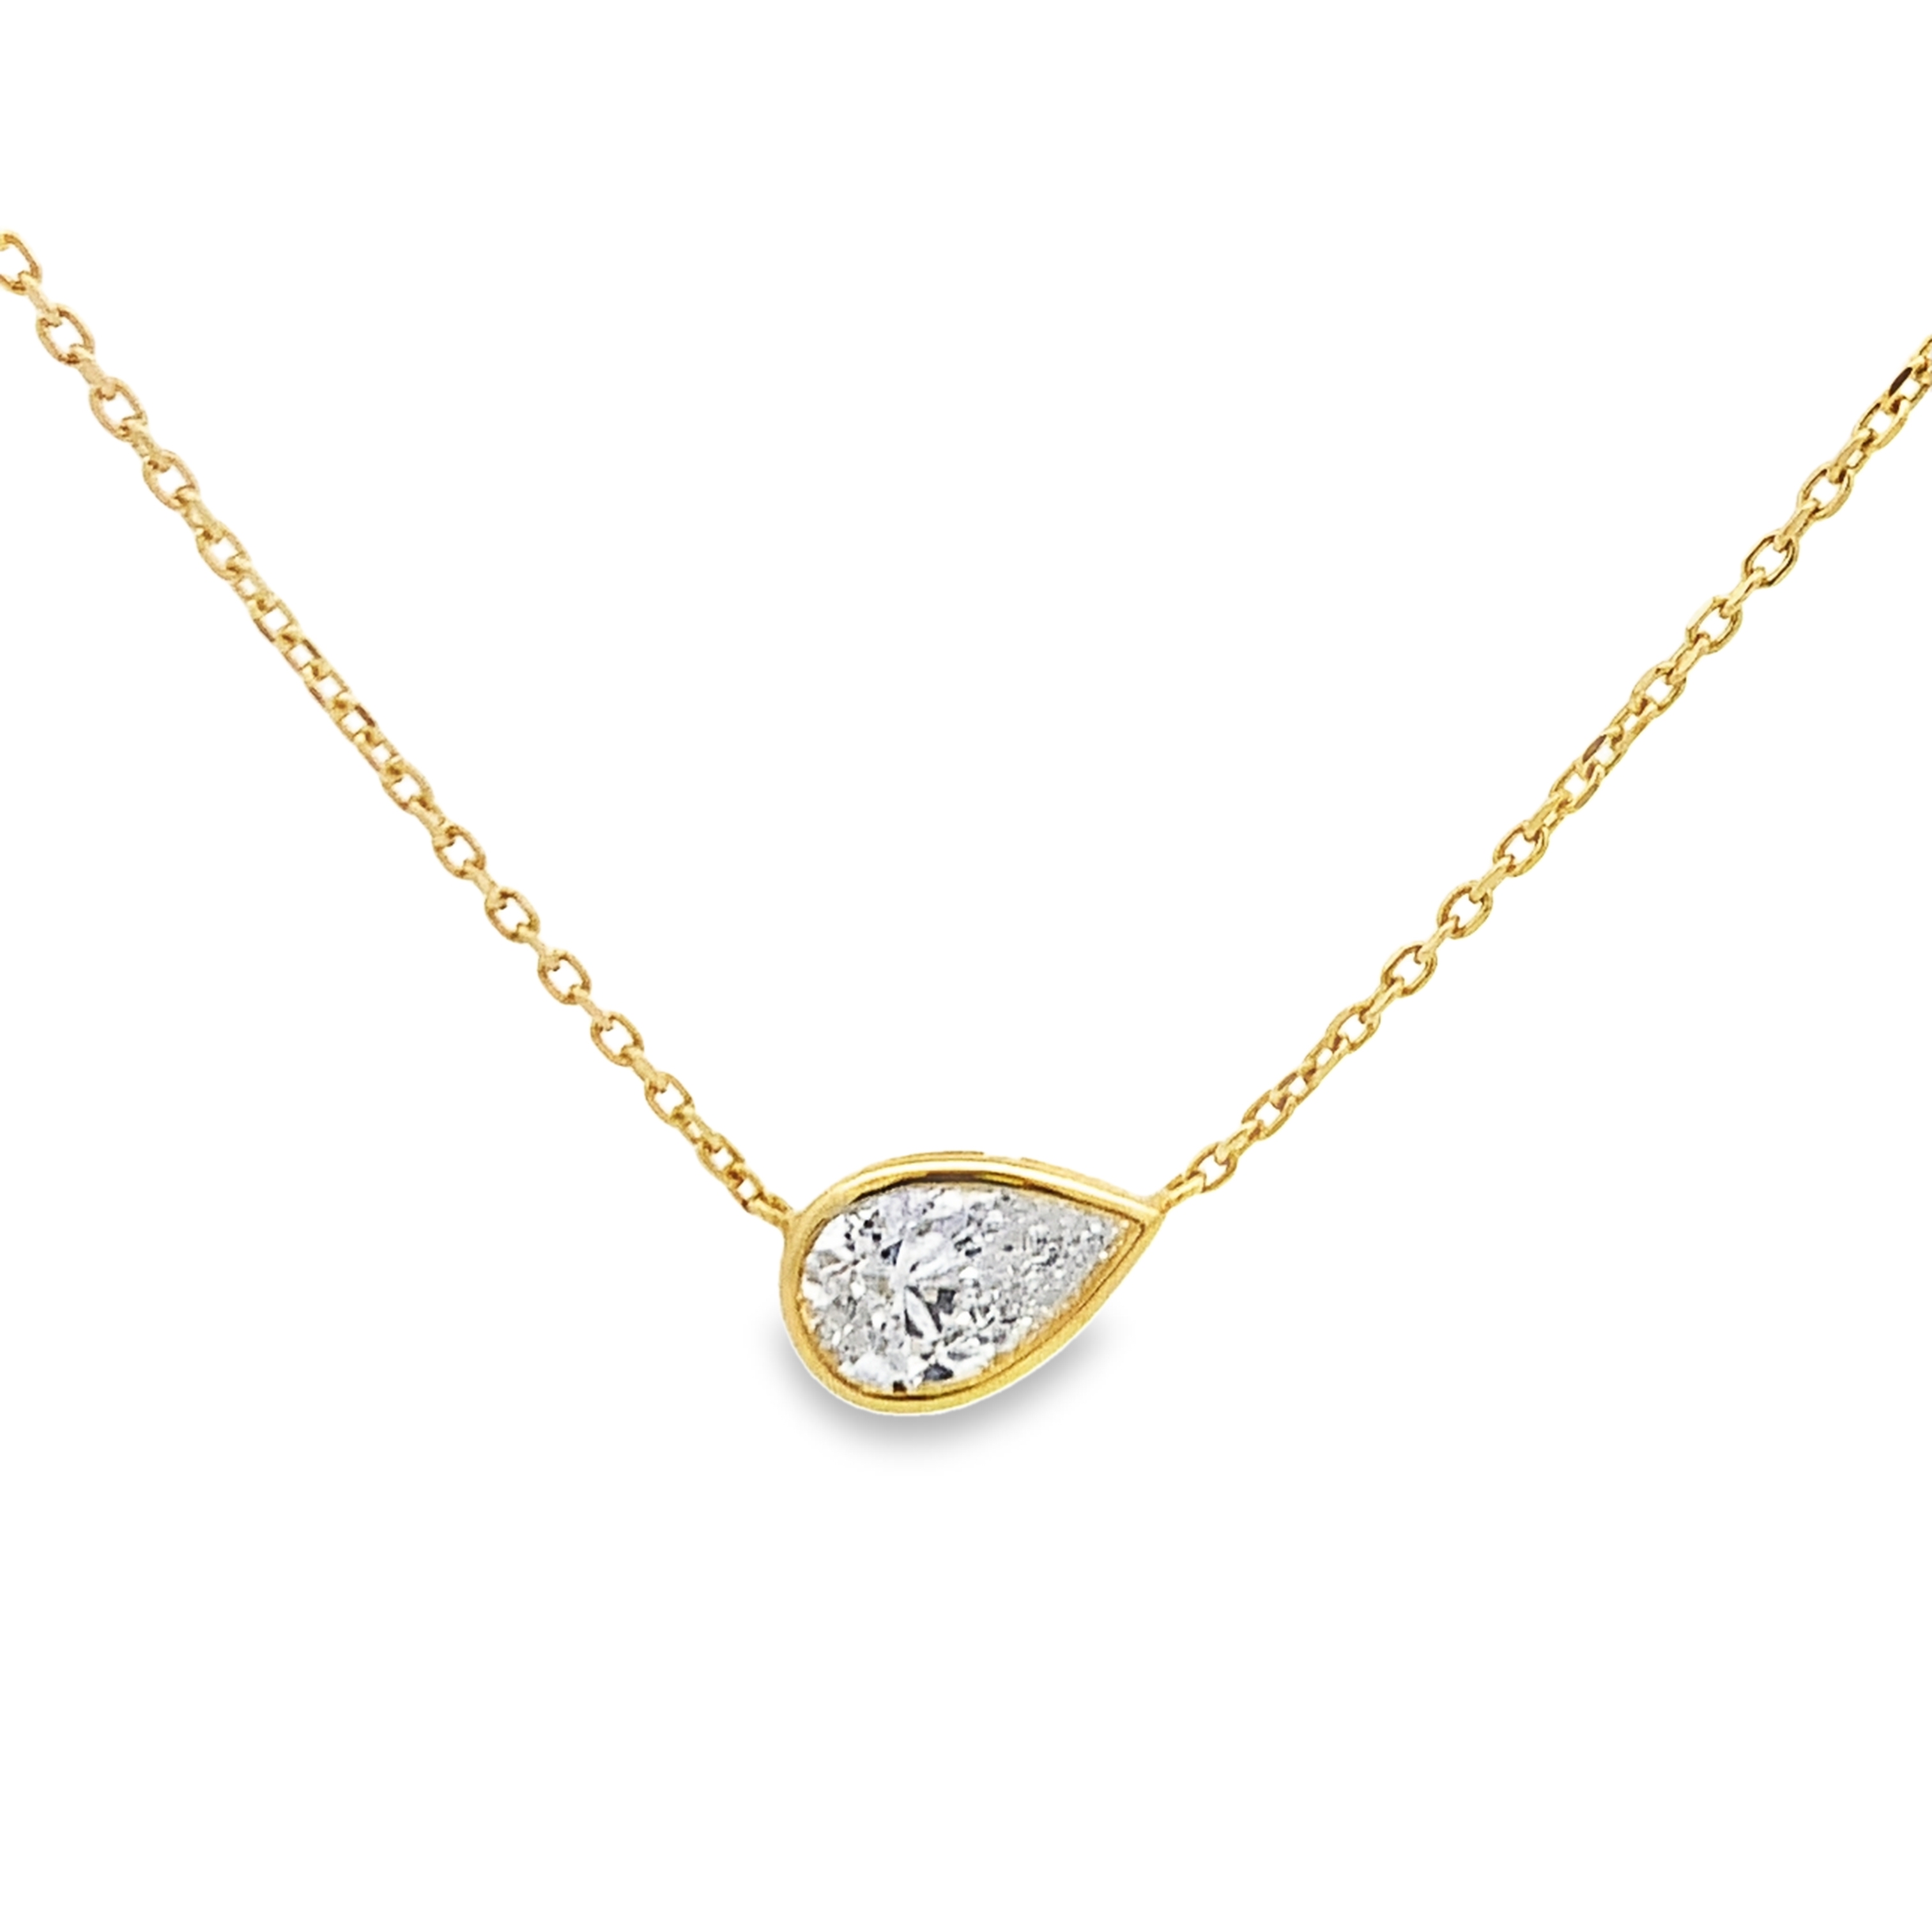 Norman Silverman 18K Yellow Gold Pear Diamond Bezel Necklace